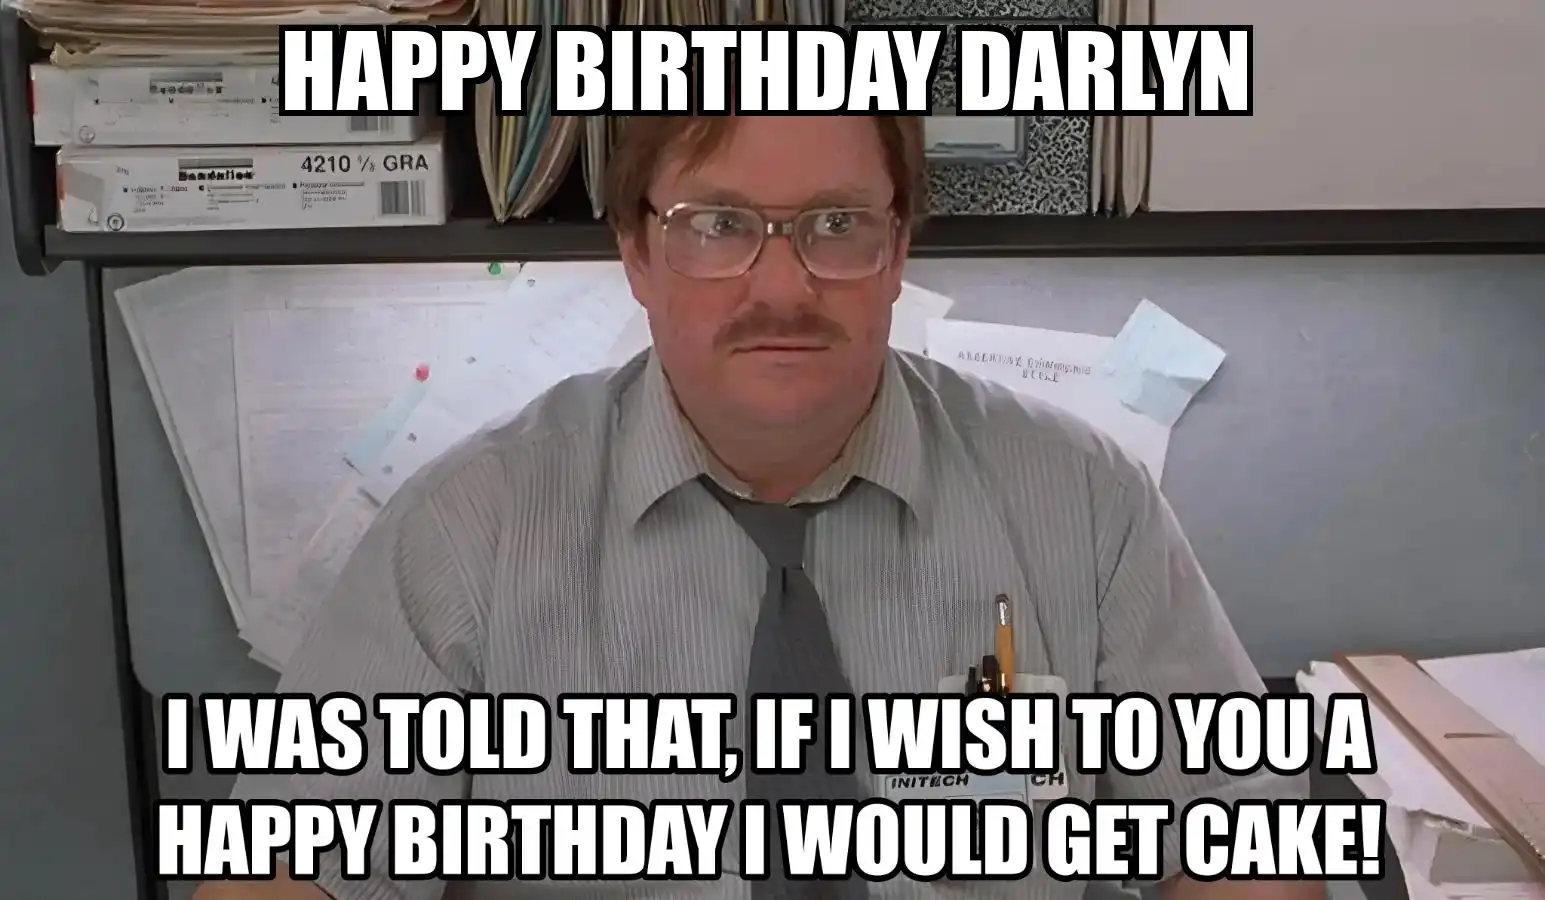 Happy Birthday Darlyn I Would Get A Cake Meme